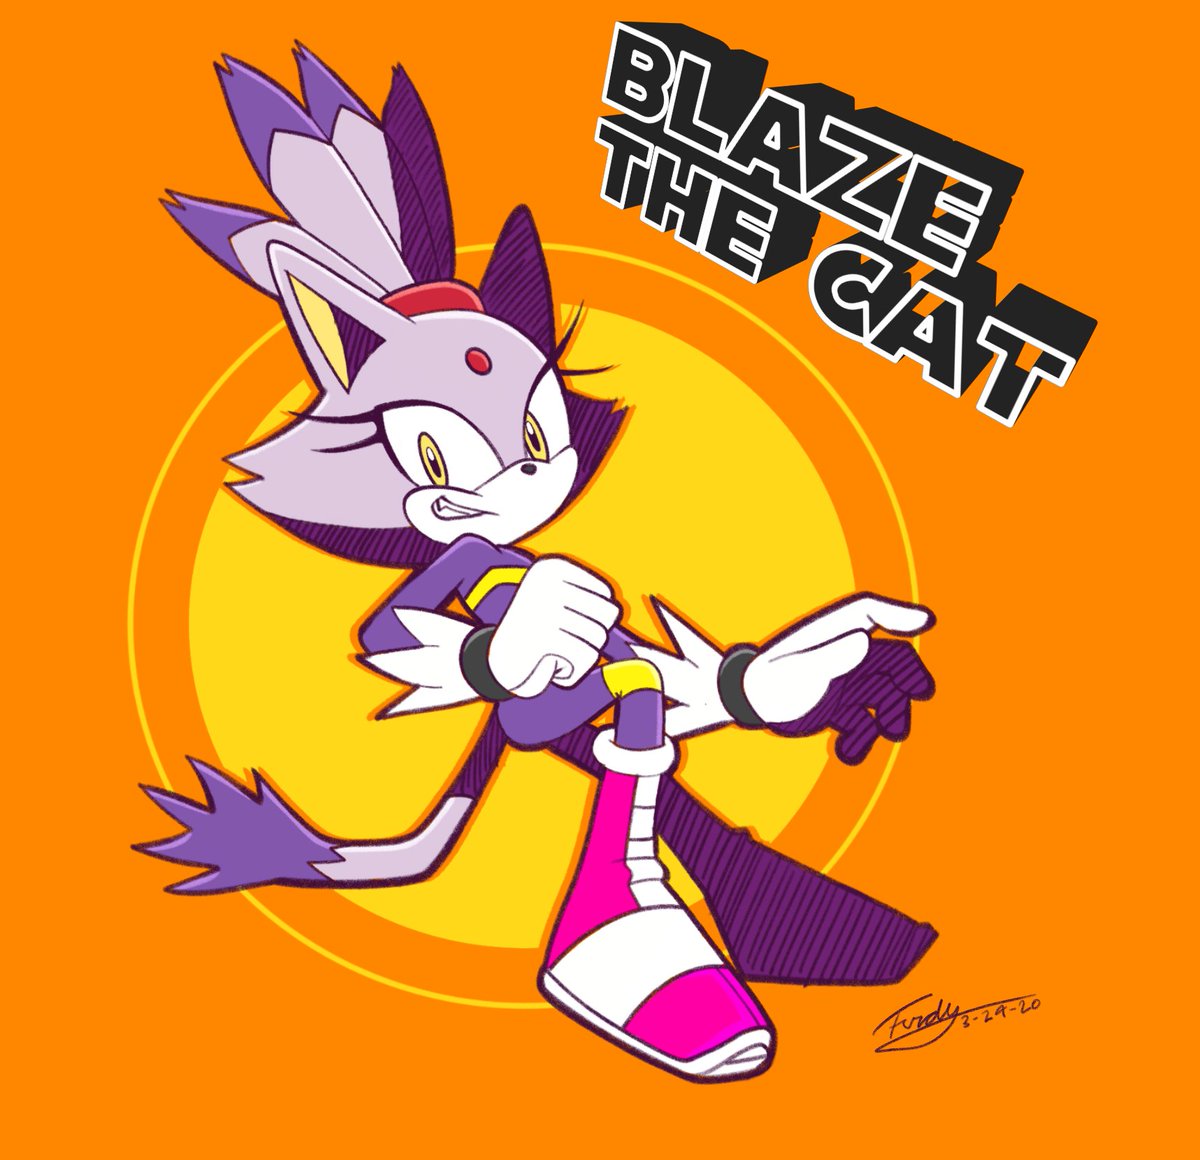 ℝ𝕚𝕘𝕙𝕥 𝕋𝕙𝕖𝕣𝕖, ℝ𝕚𝕕𝕖 𝕠𝕟! #blazethecat #SonicTheHedgehog #Sonicriders